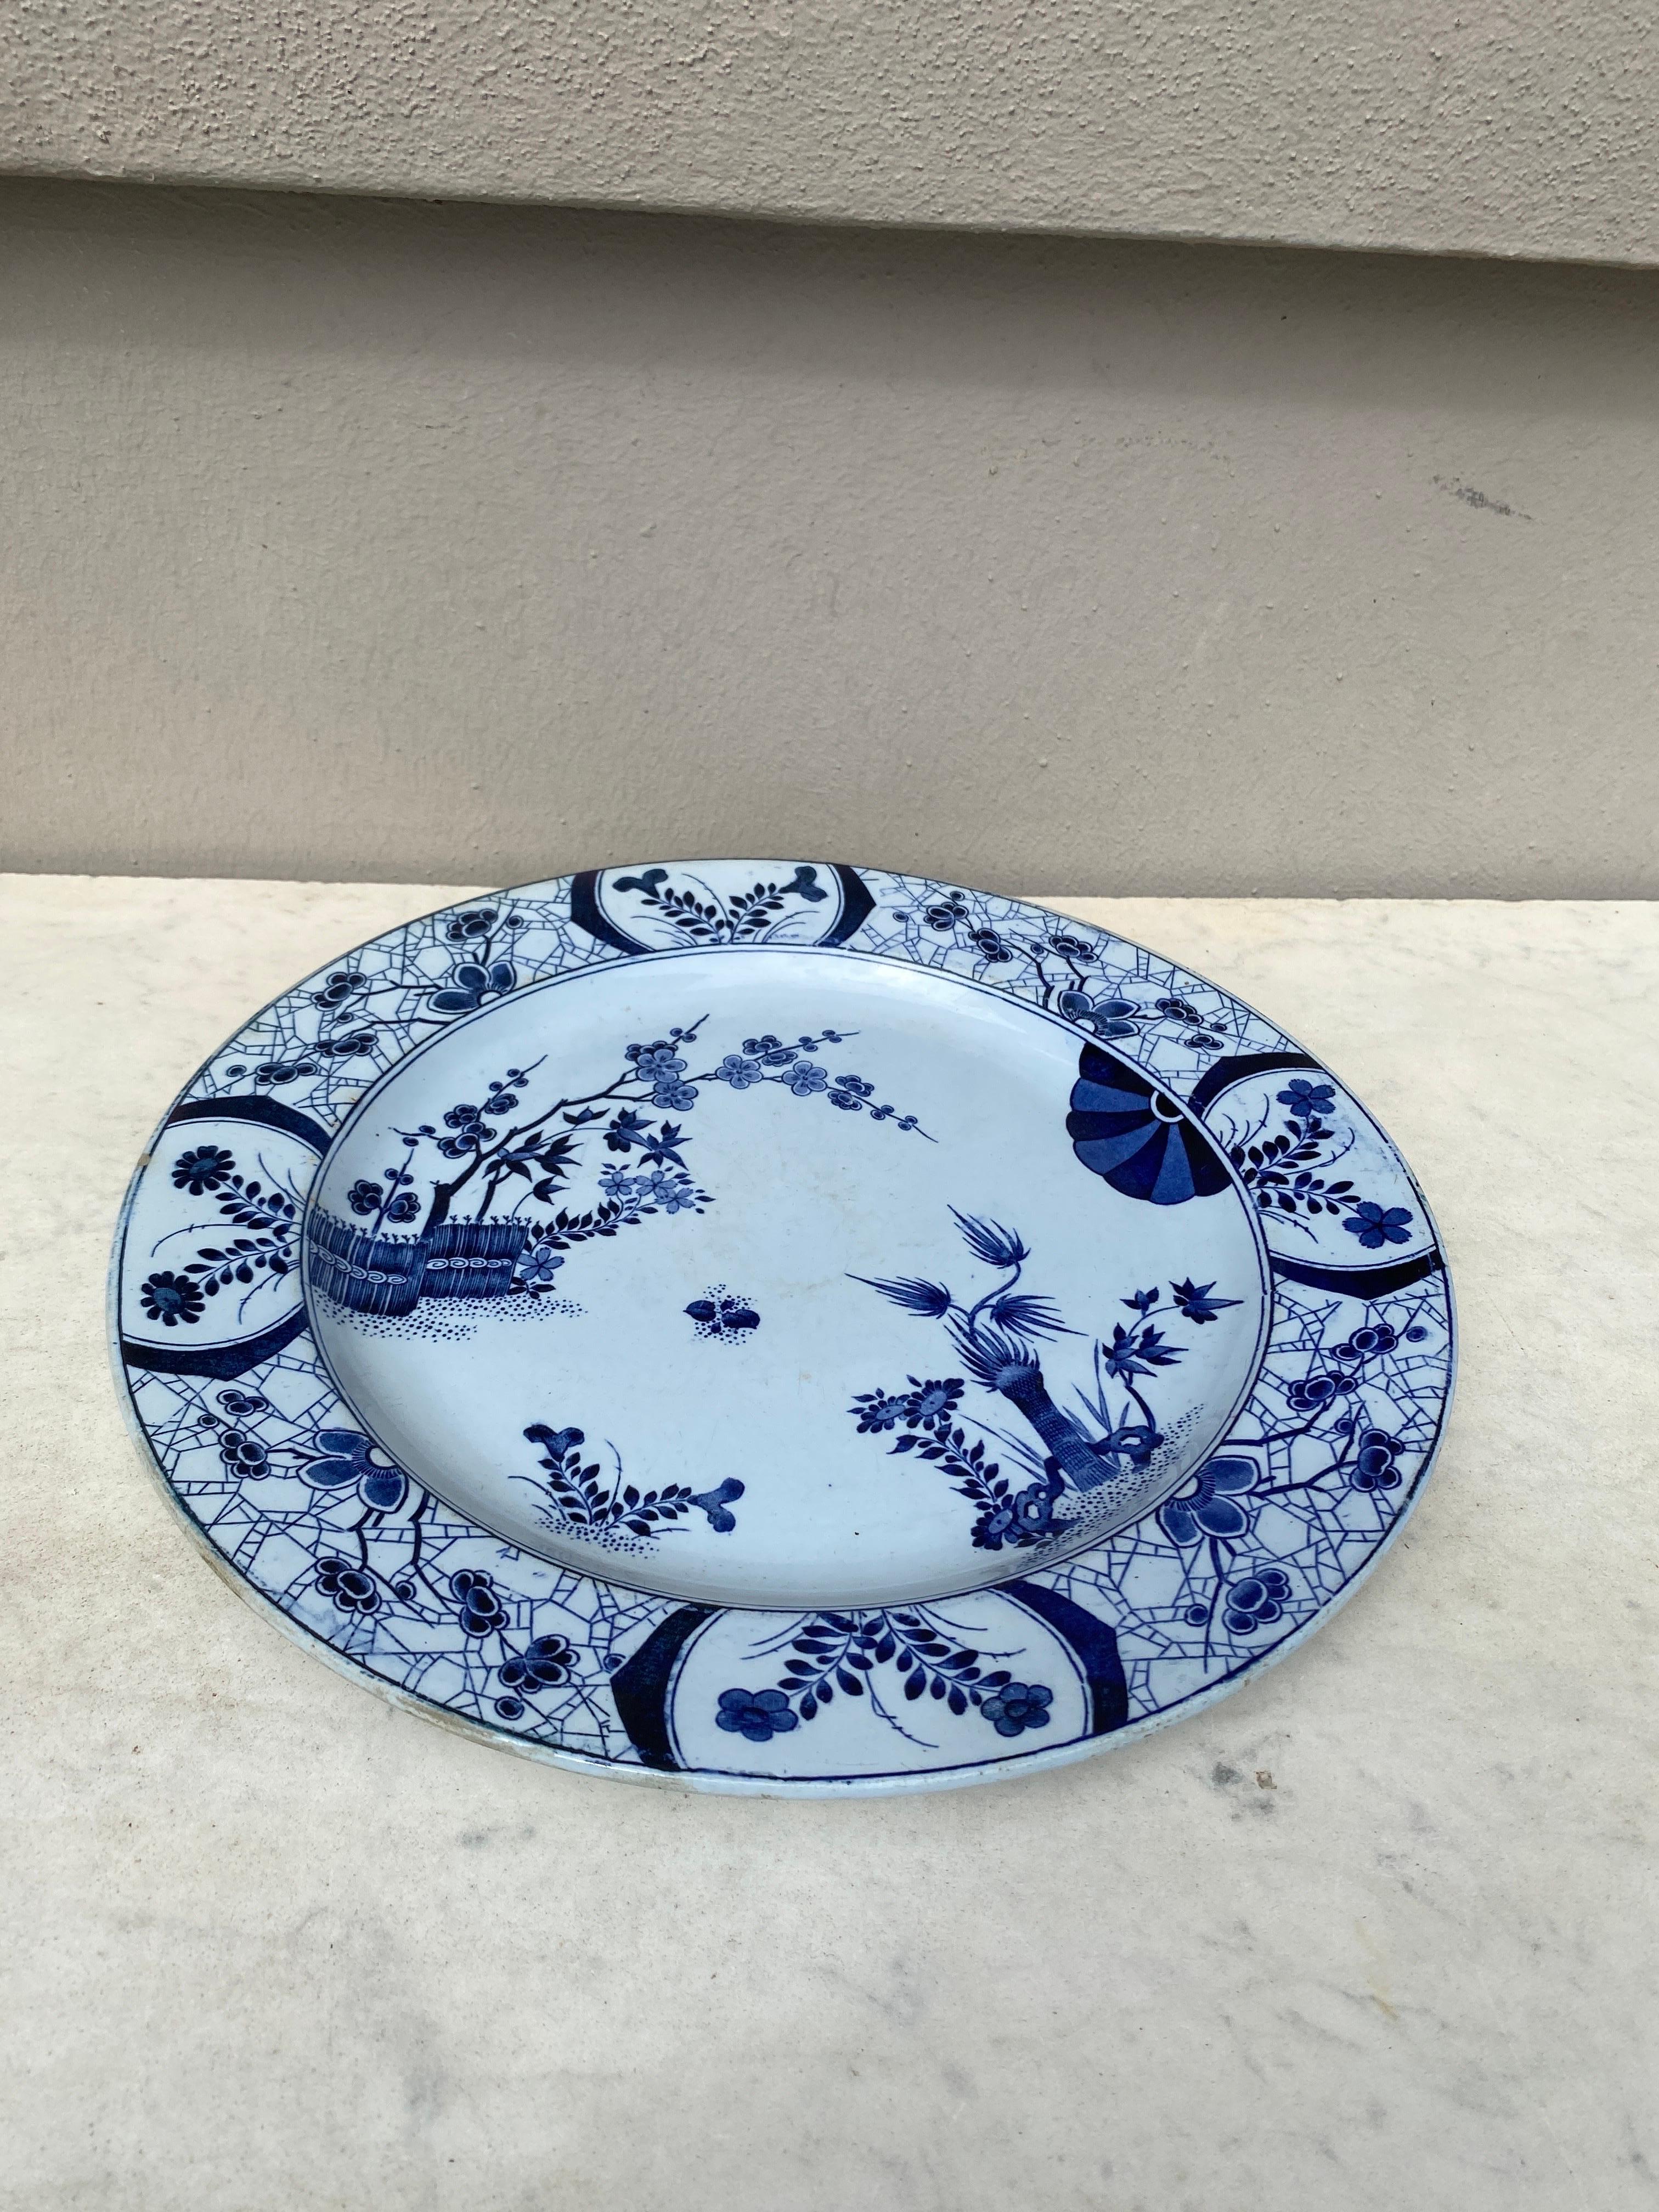 19th Century Blue & White Platter signed Japon Creil & Montereau.
12.3 inches diameter.